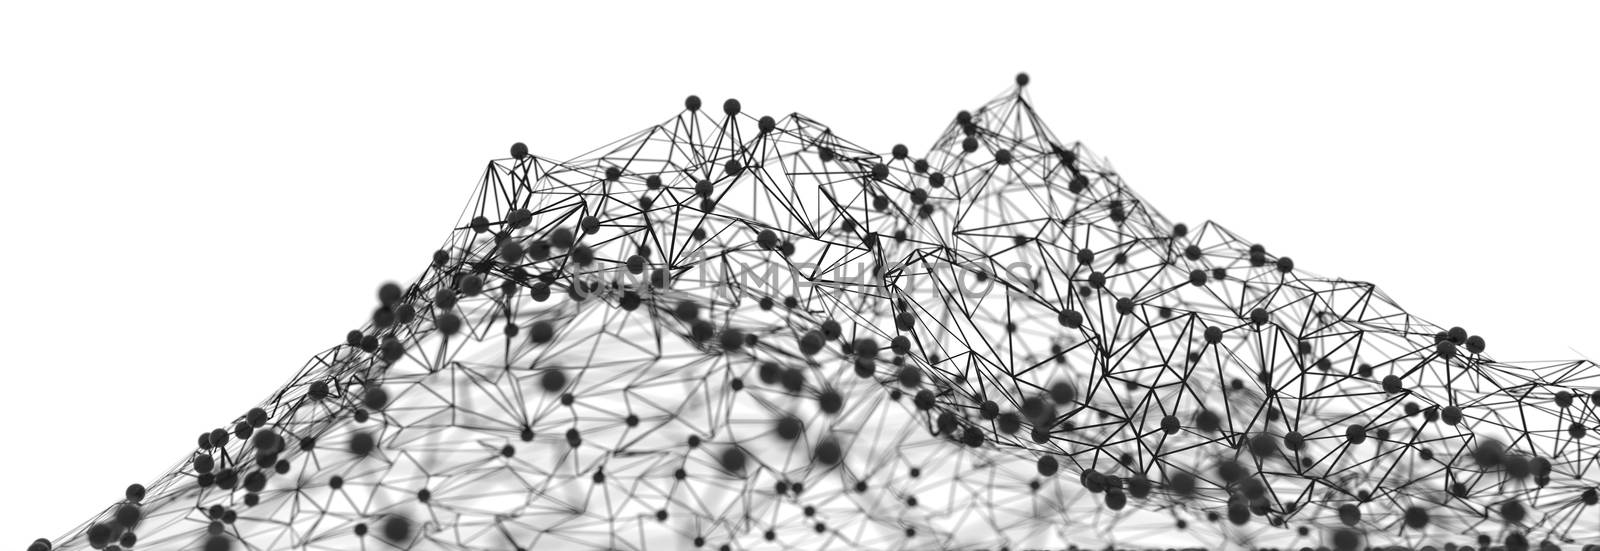 Concept of Network or Internet Communication. 3d illustration. White background